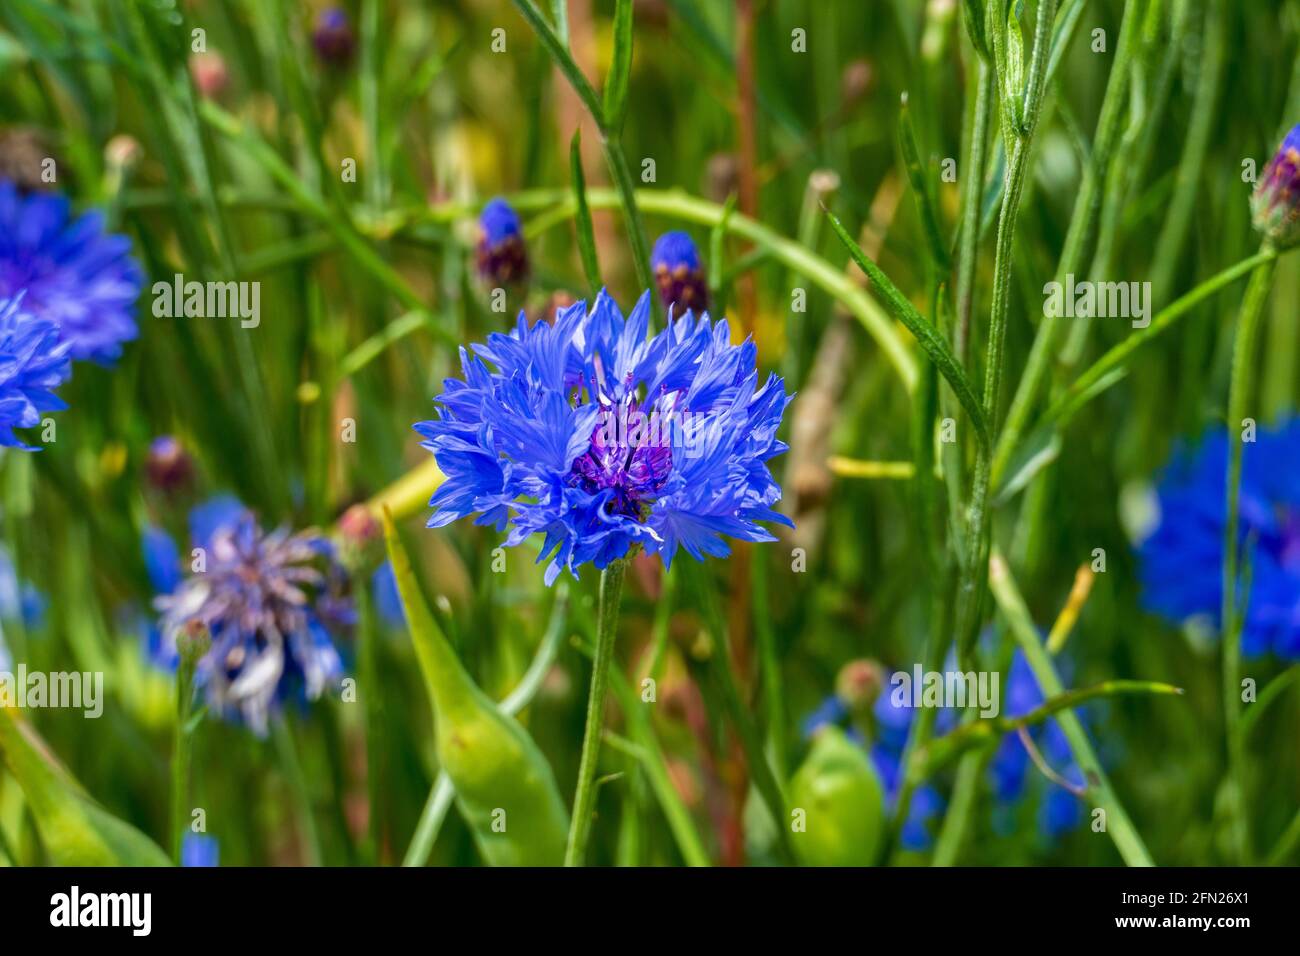 Blaue Kornblume, cyanus segetum, am Rande eines Getreide Feld Stock Photo